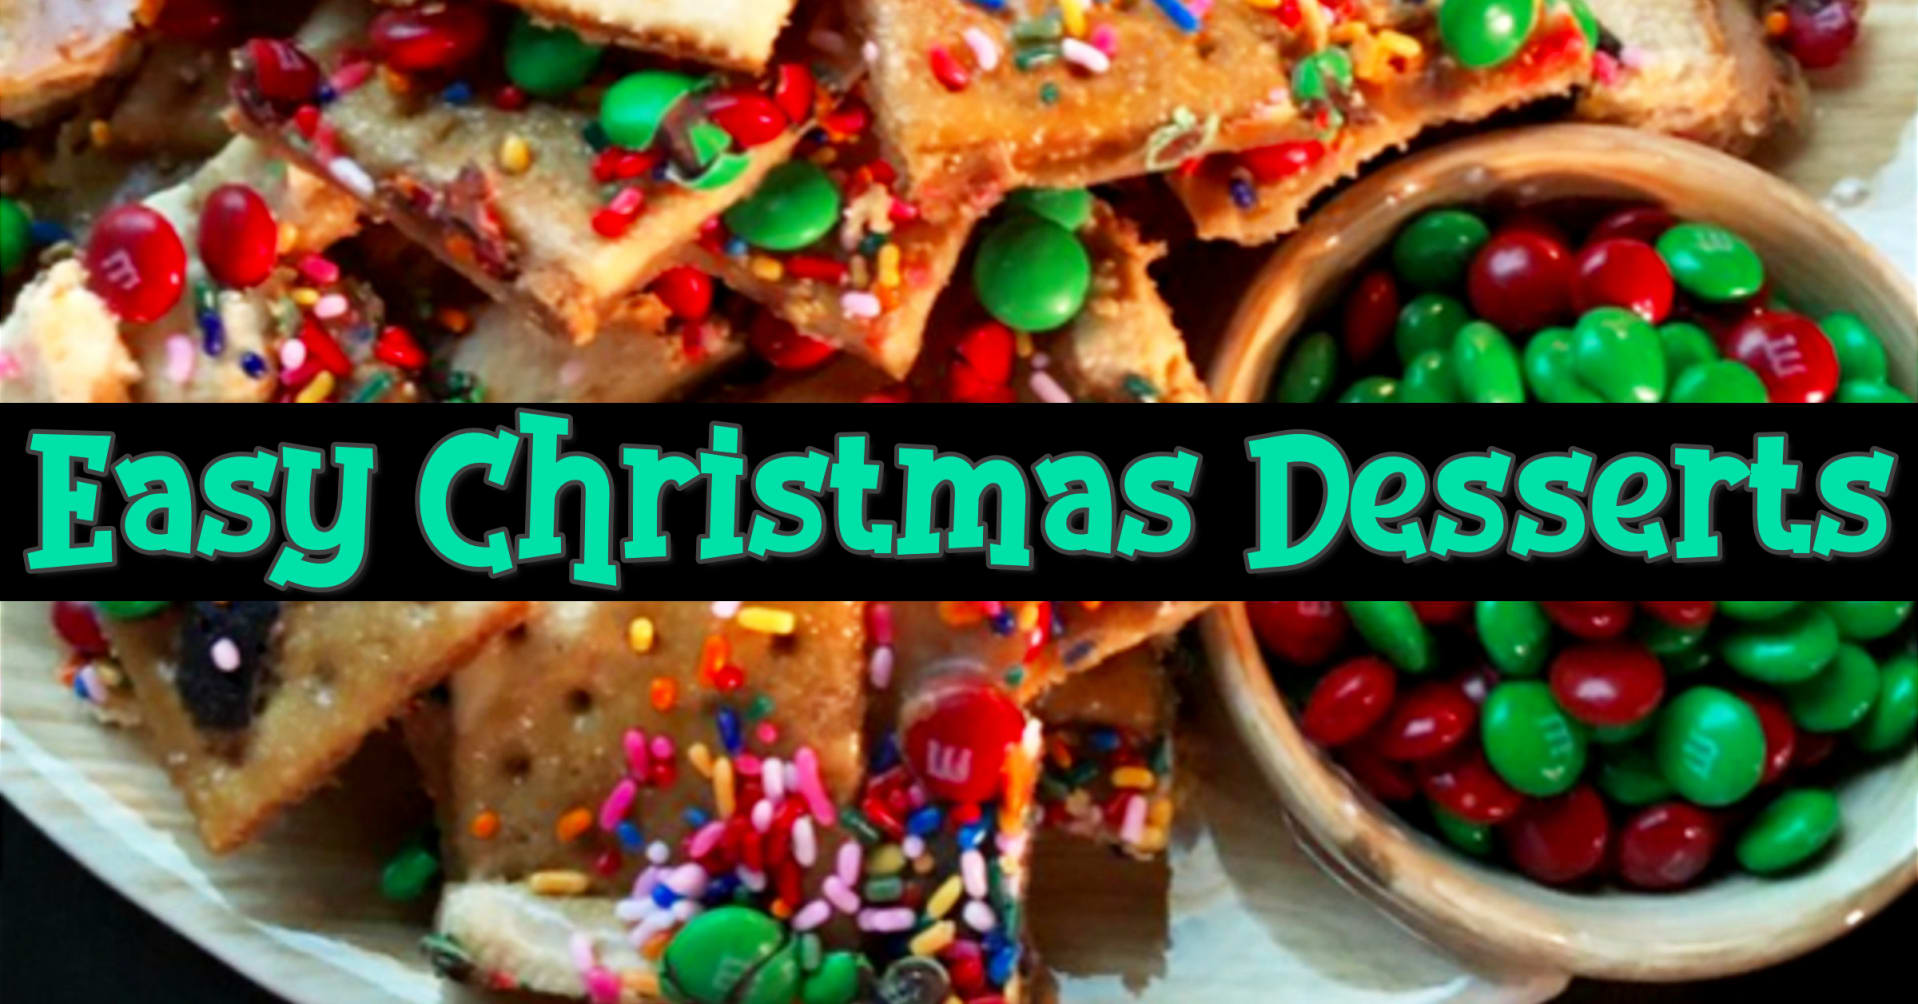 Christmas Potluck Dessert Ideas - Easy Christmas Dessert Ideas – Creative Christmas Desserts for a Party or for a Crowd